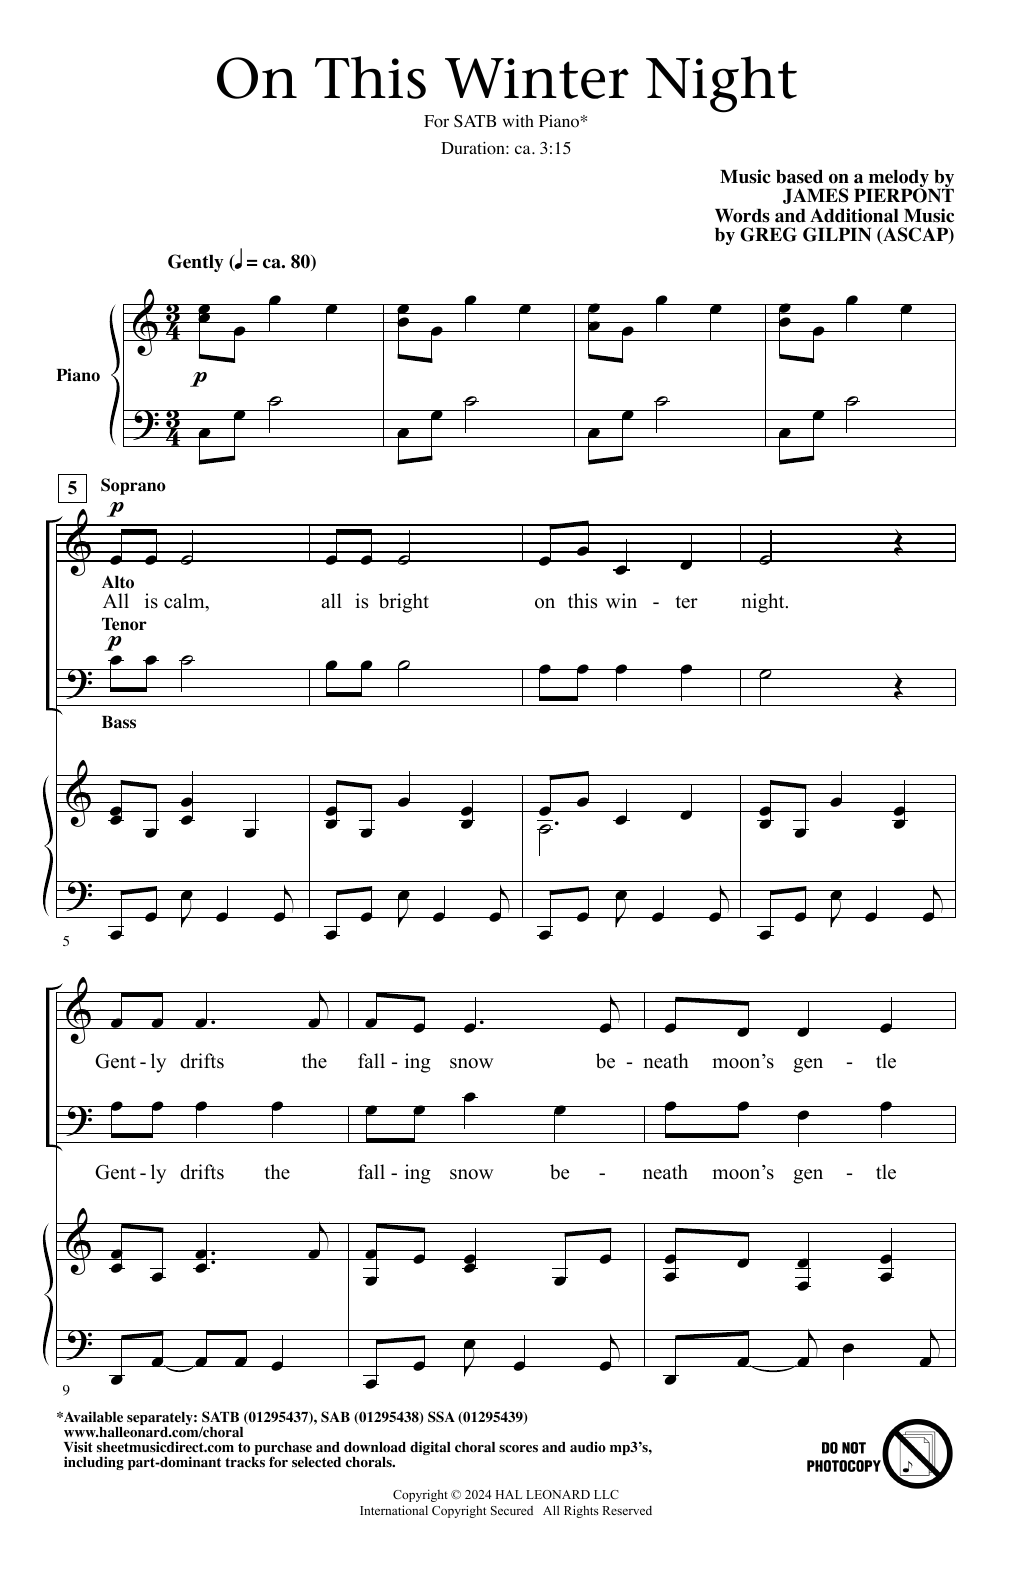 Greg Gilpin On This Winter Night Sheet Music Notes & Chords for SAB Choir - Download or Print PDF